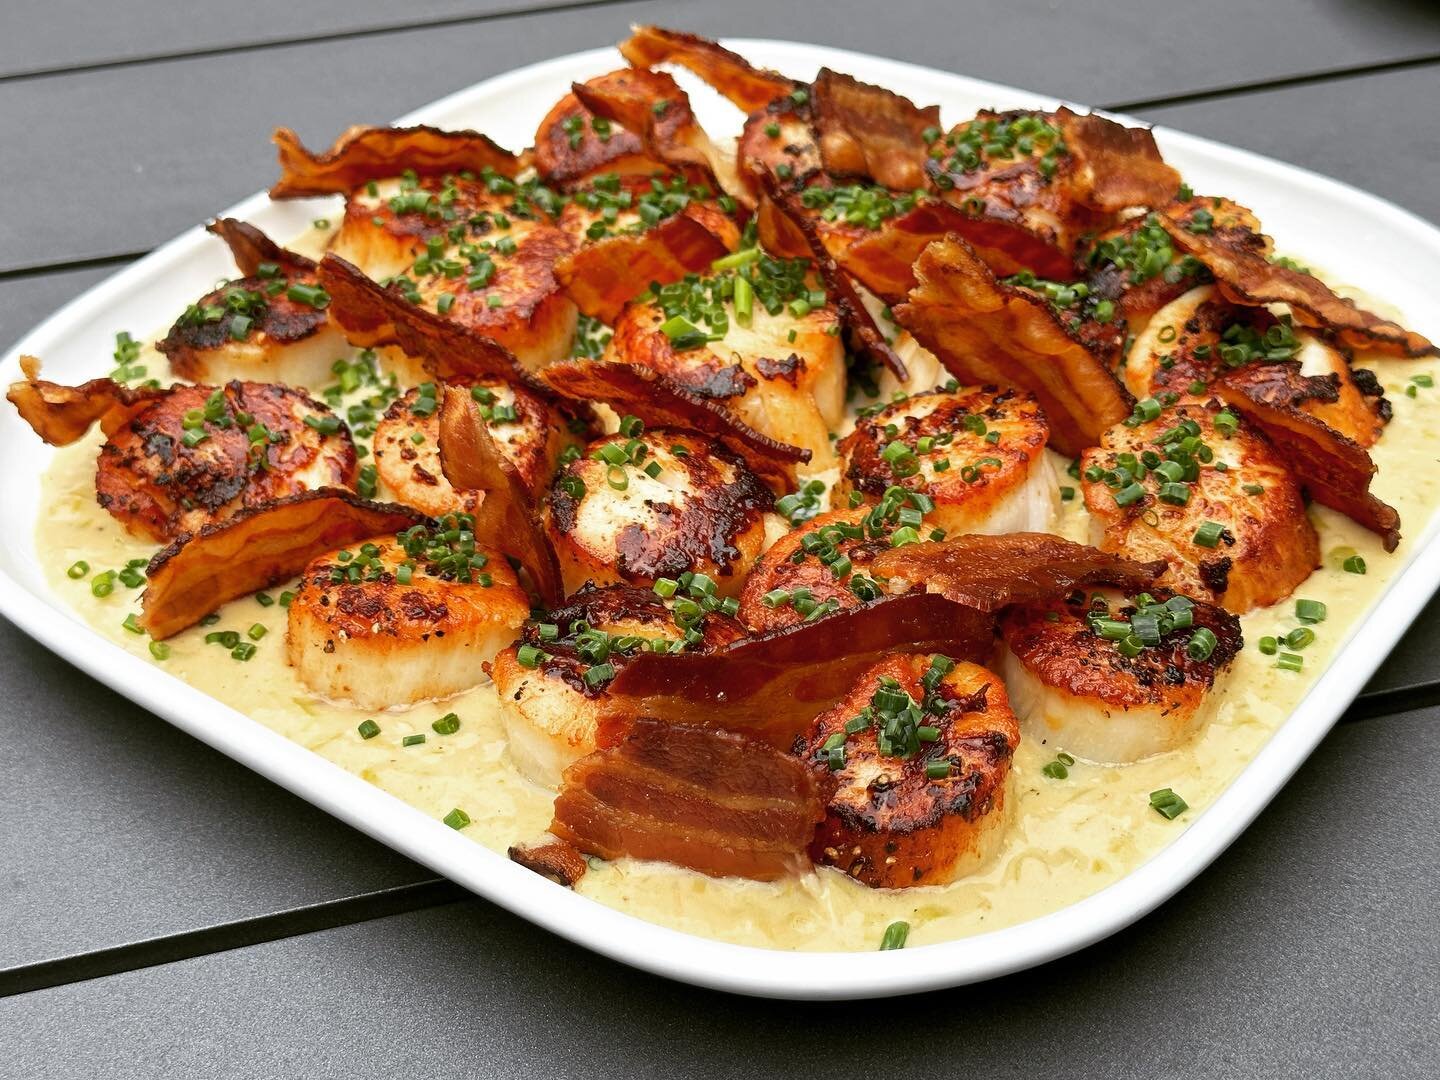 Pan seared scallops on a bed of leek pur&eacute;e and crisp bacon.